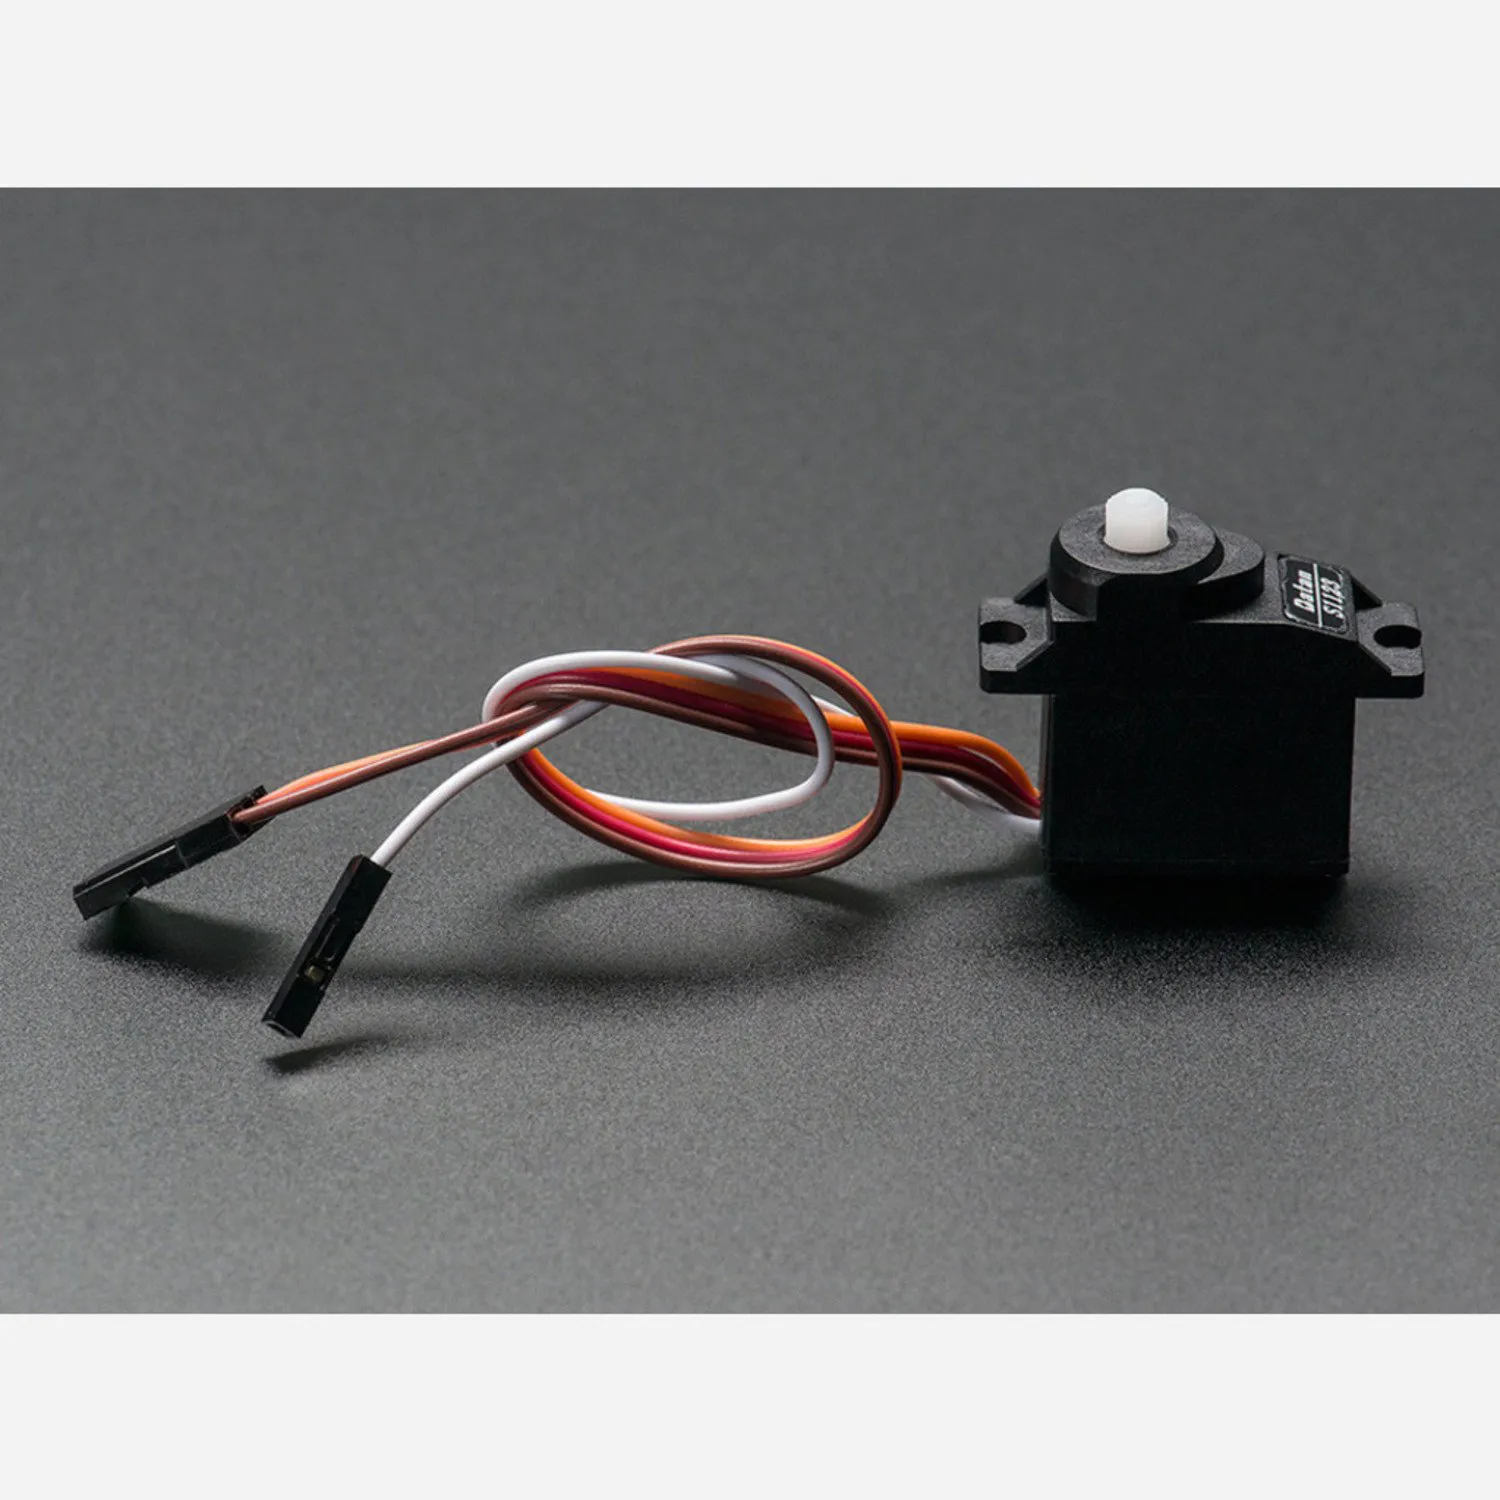 Photo of Analog Feedback Micro Servo - Plastic Gear